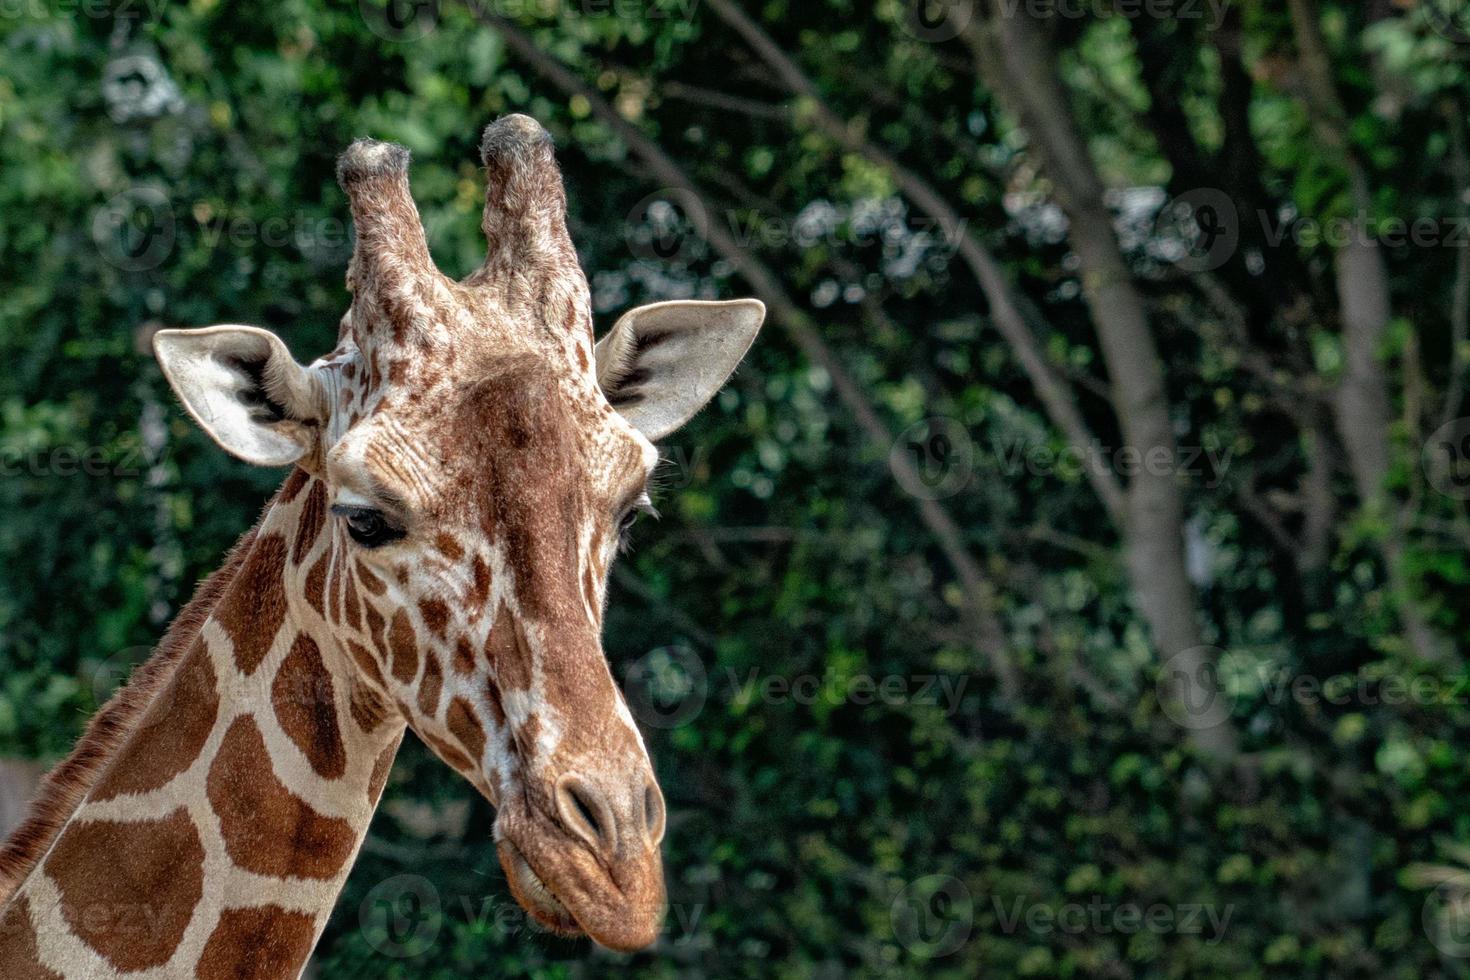 tanzanie girafe gros plan portrait photo